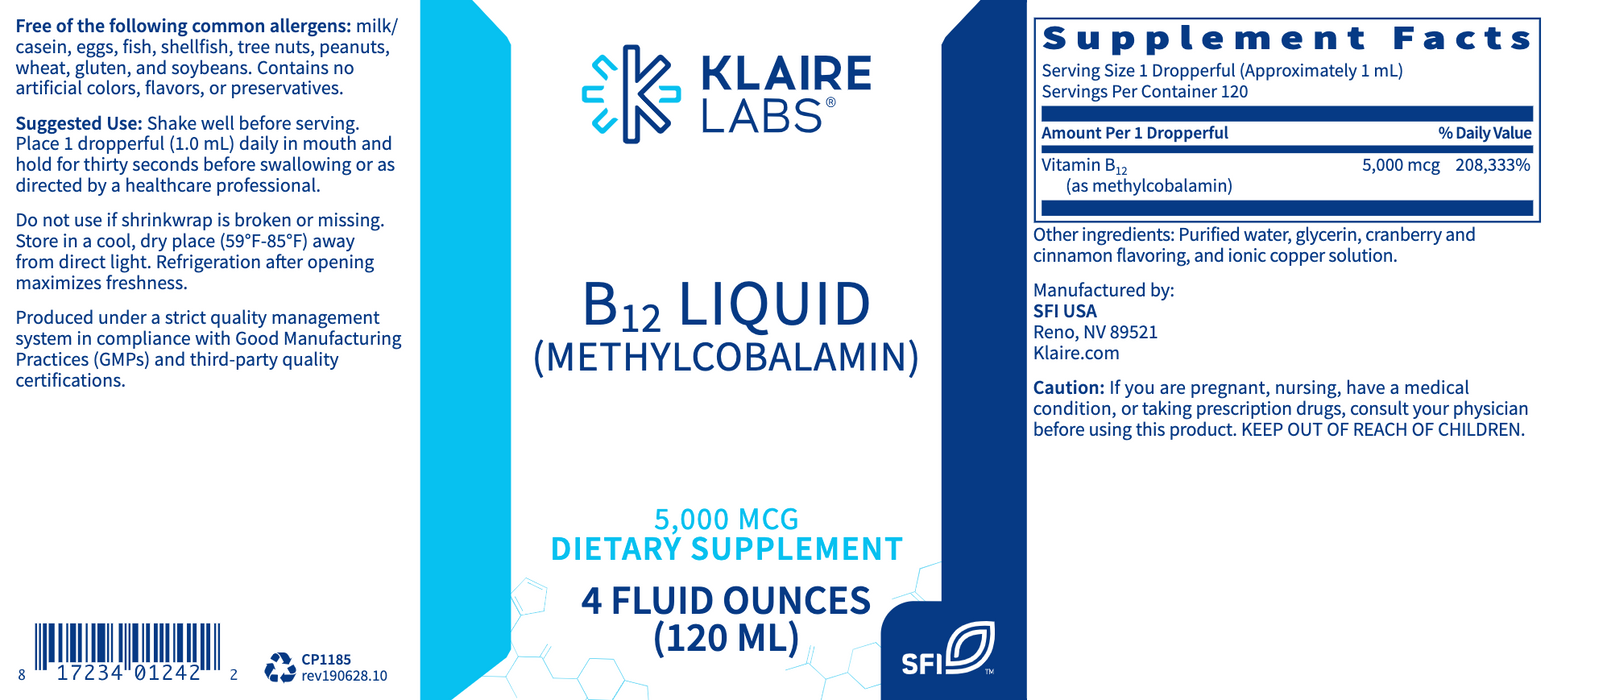 B12 Liquid (Methylcobalamin) (5mg) (120 ml)-Vitamins & Supplements-Klaire Labs - SFI Health-Pine Street Clinic